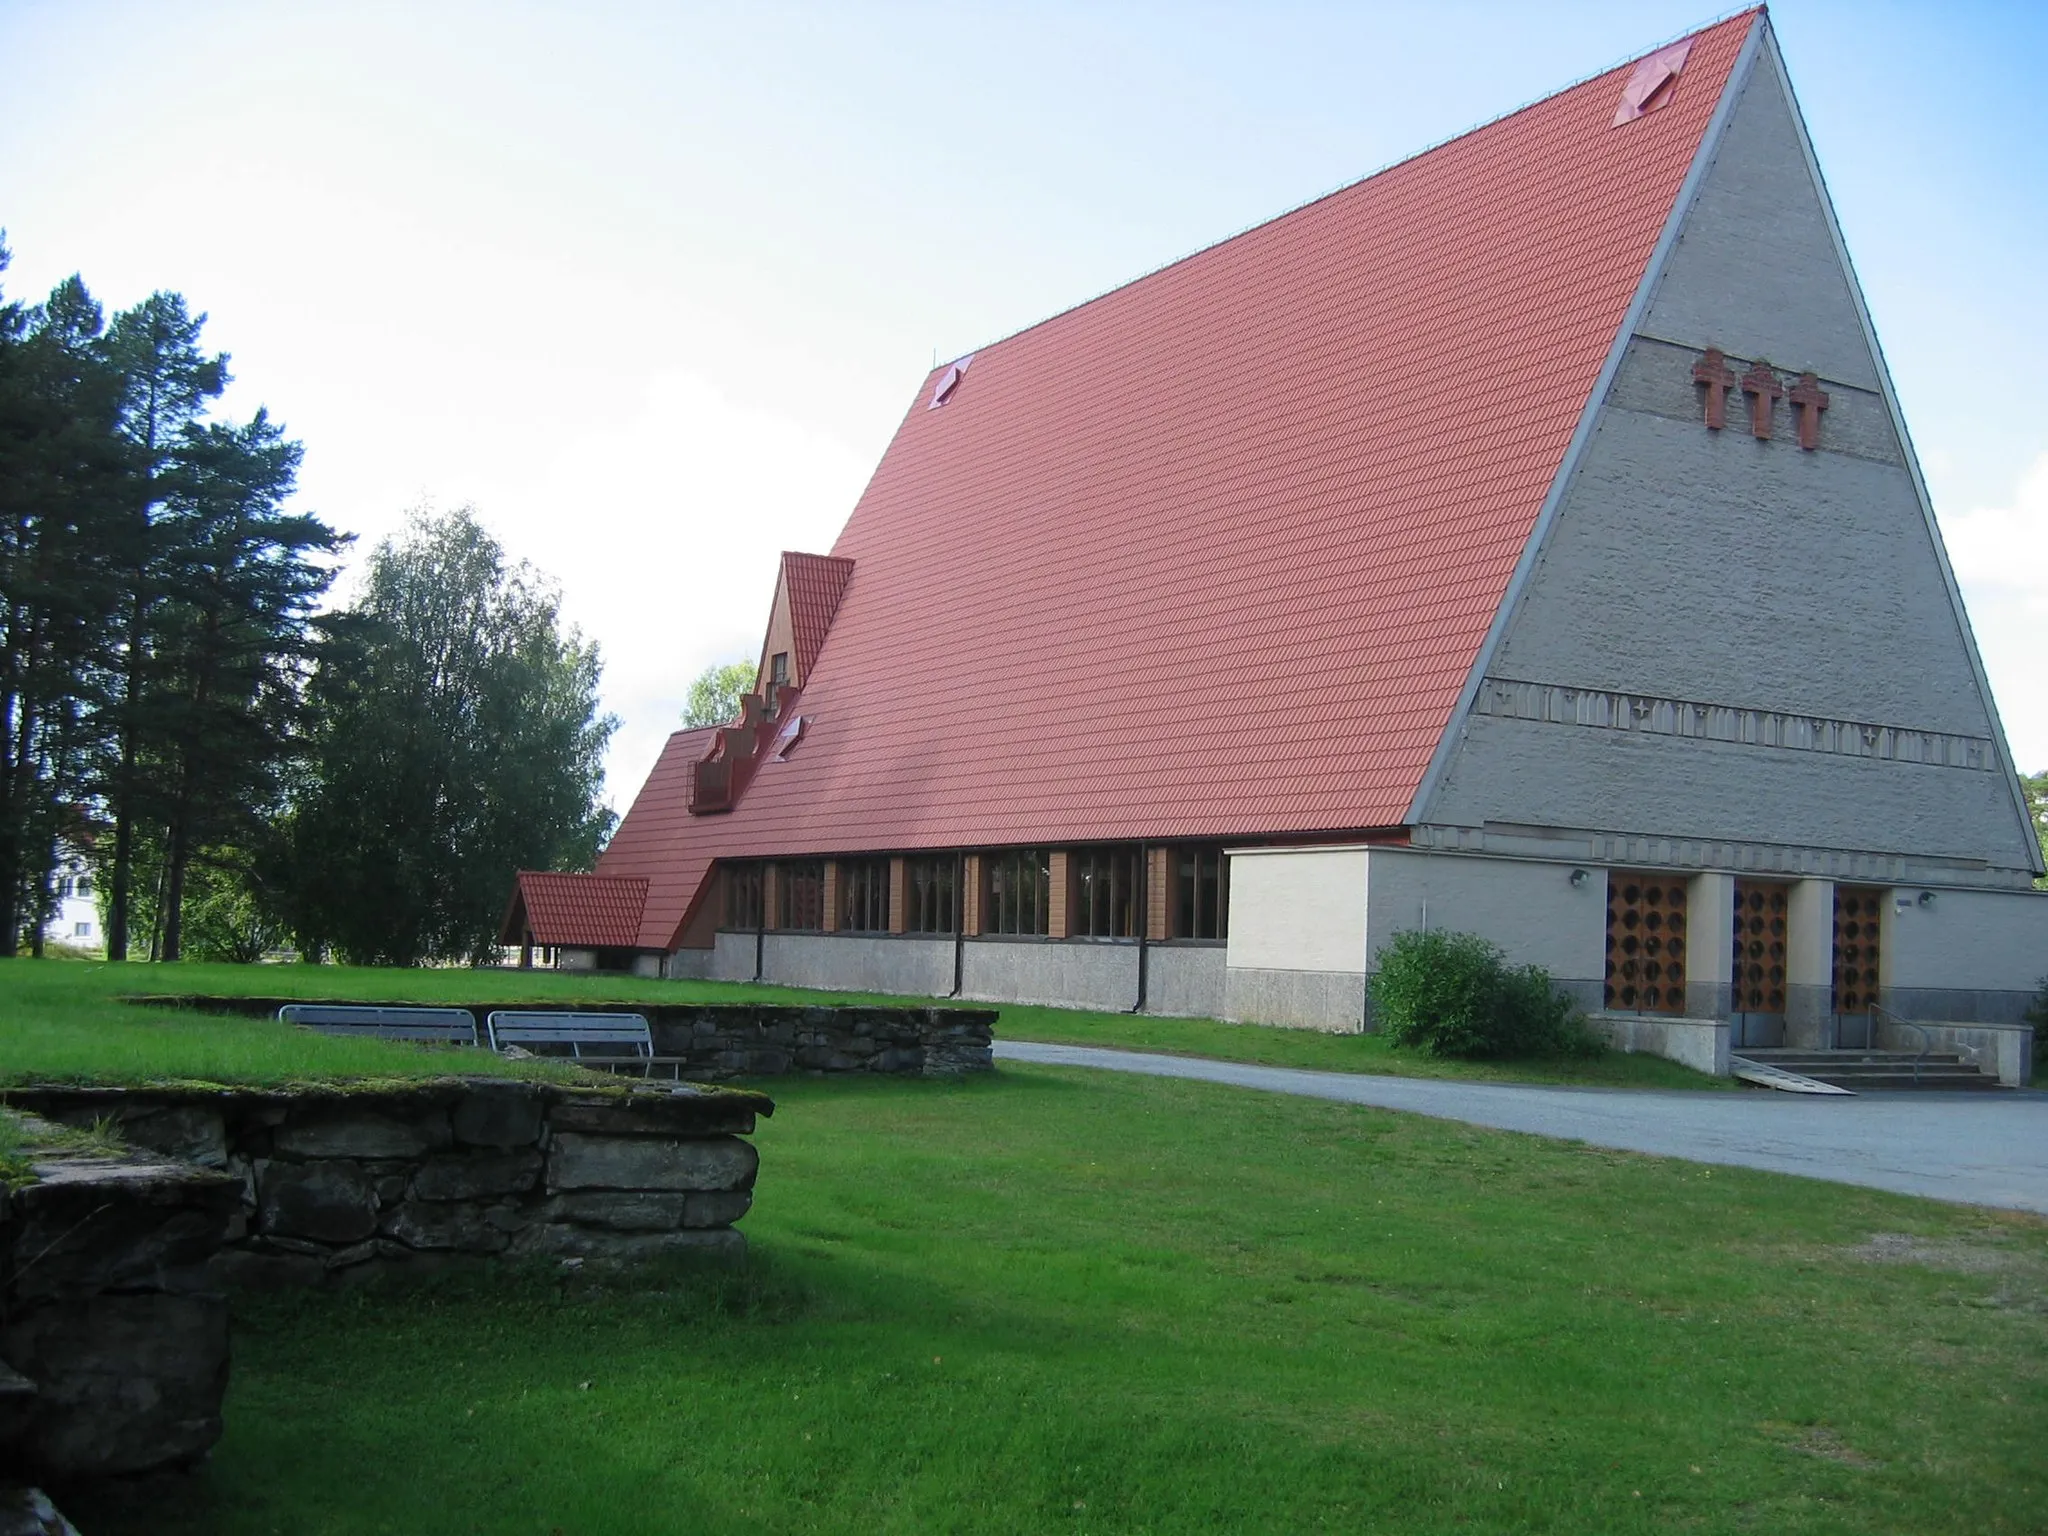 Photo showing: The Lutheran church of the municipality of Puolanka, Finland.